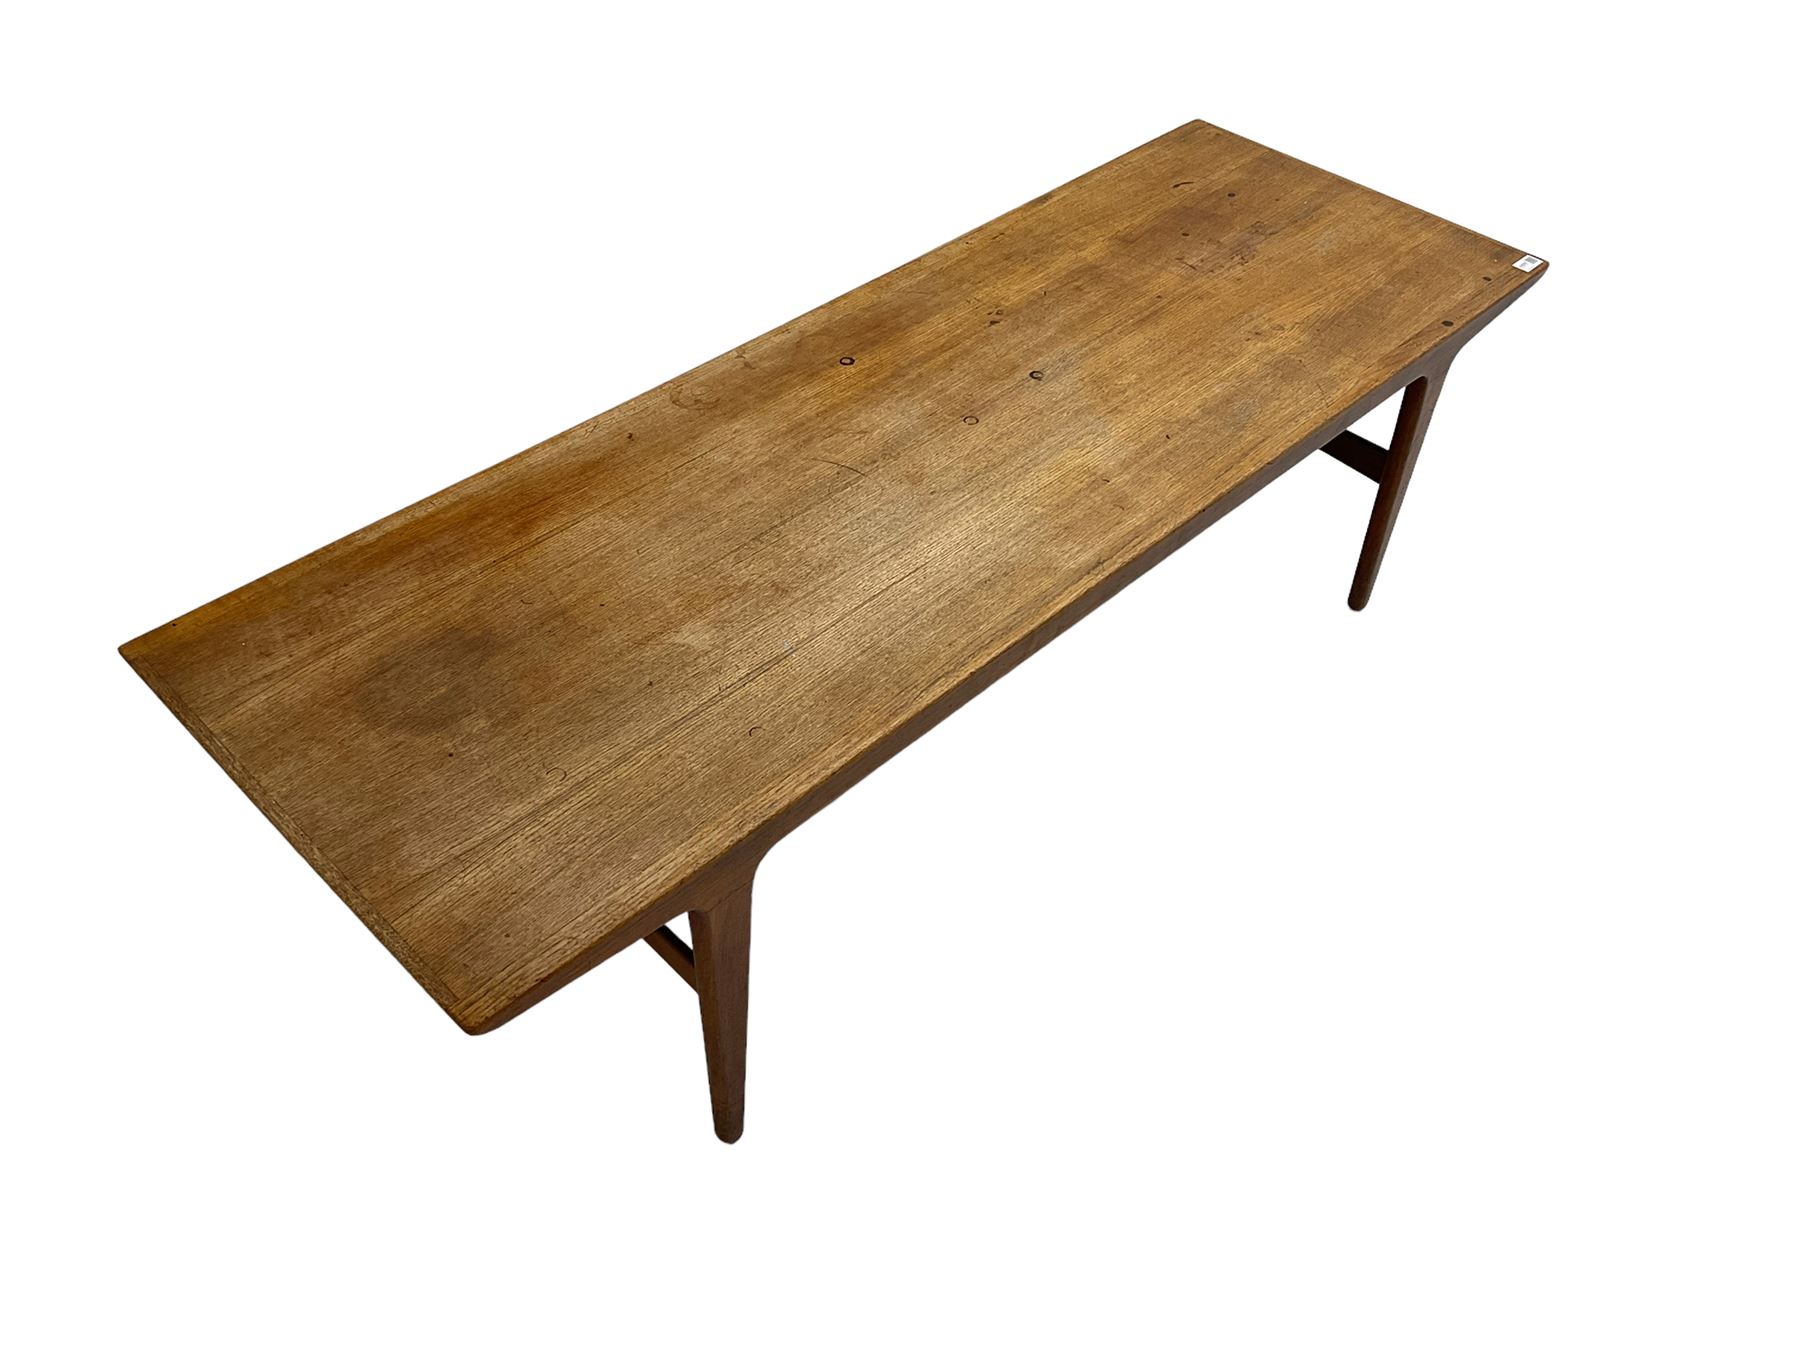 Mid-20th century teak rectangular coffee table - Image 5 of 6